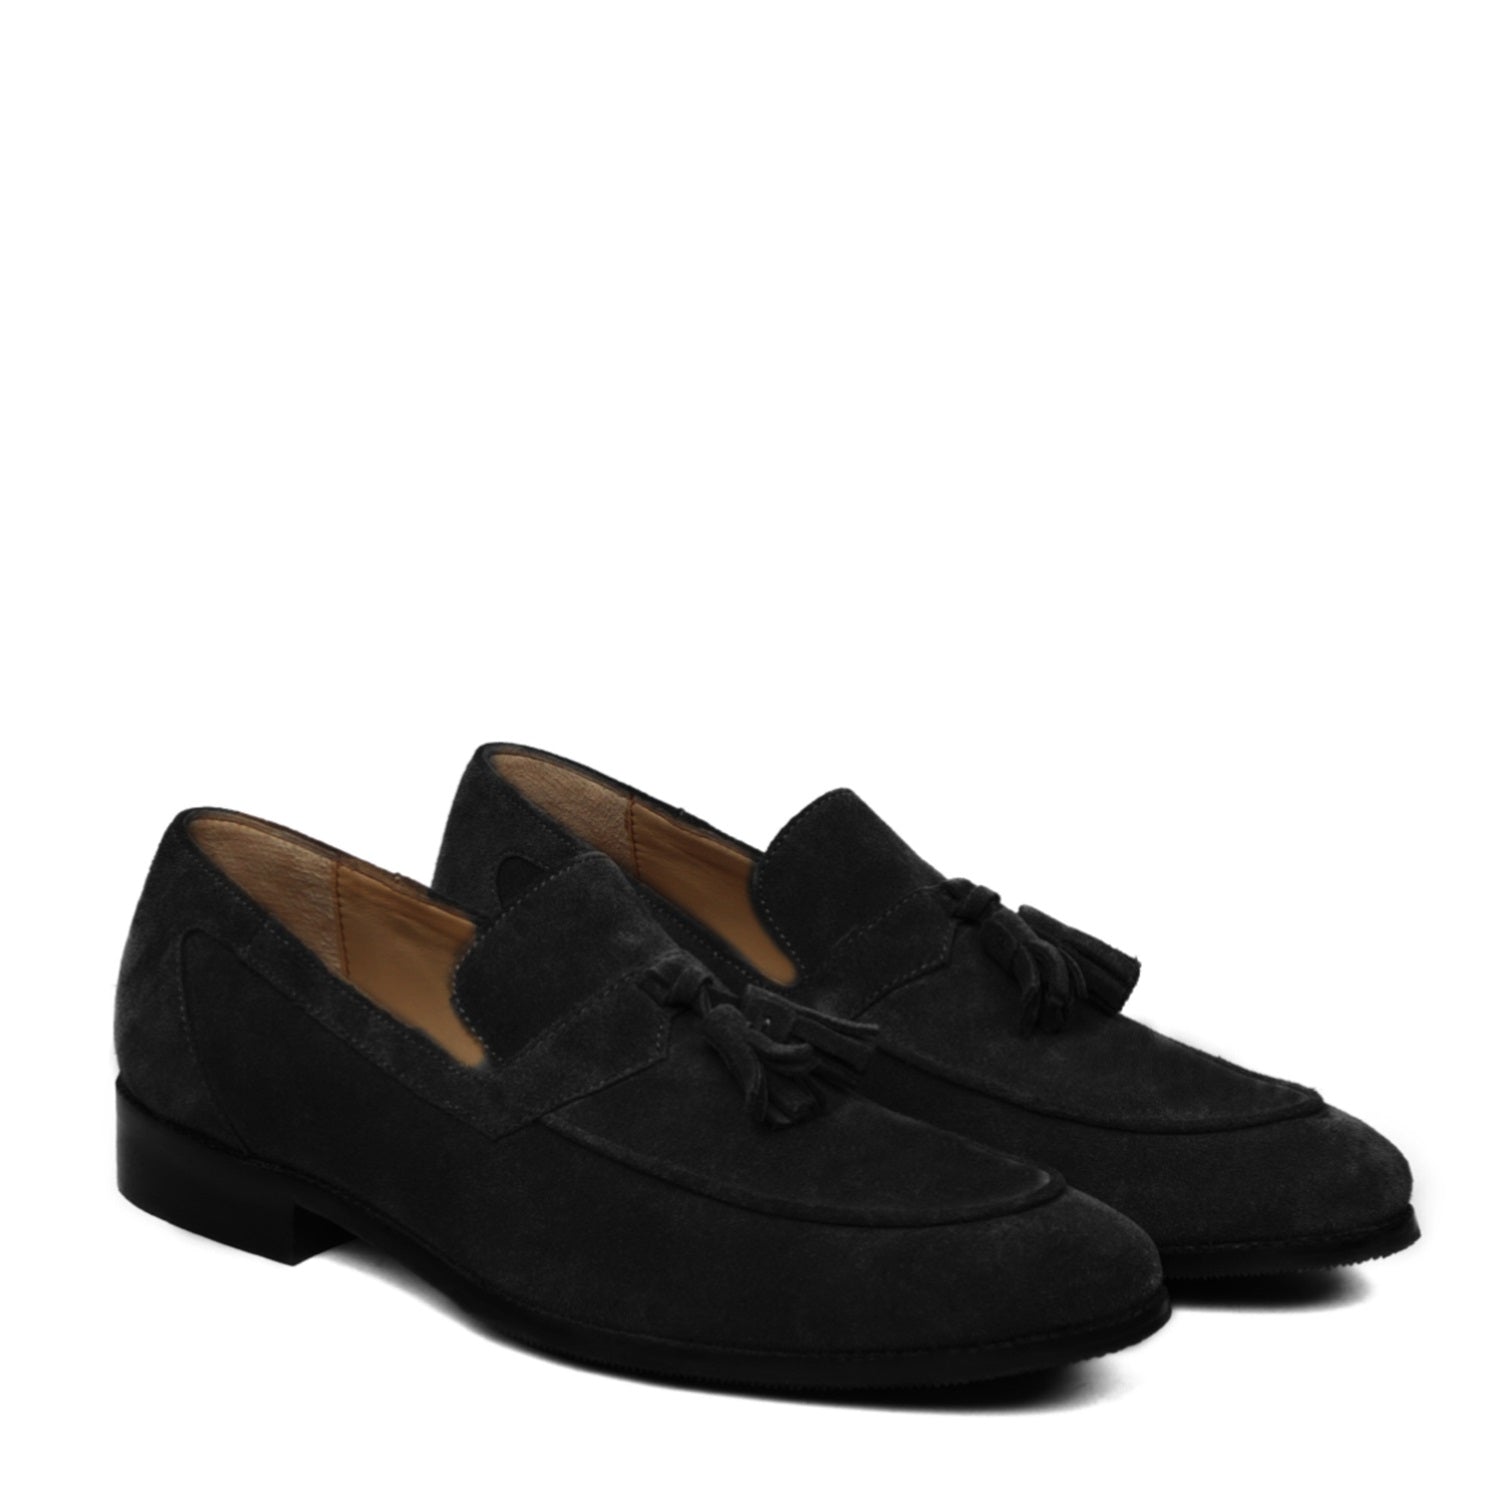 Apron Toe Tassel Slip-On Shoes For Men in Black Suede Leather